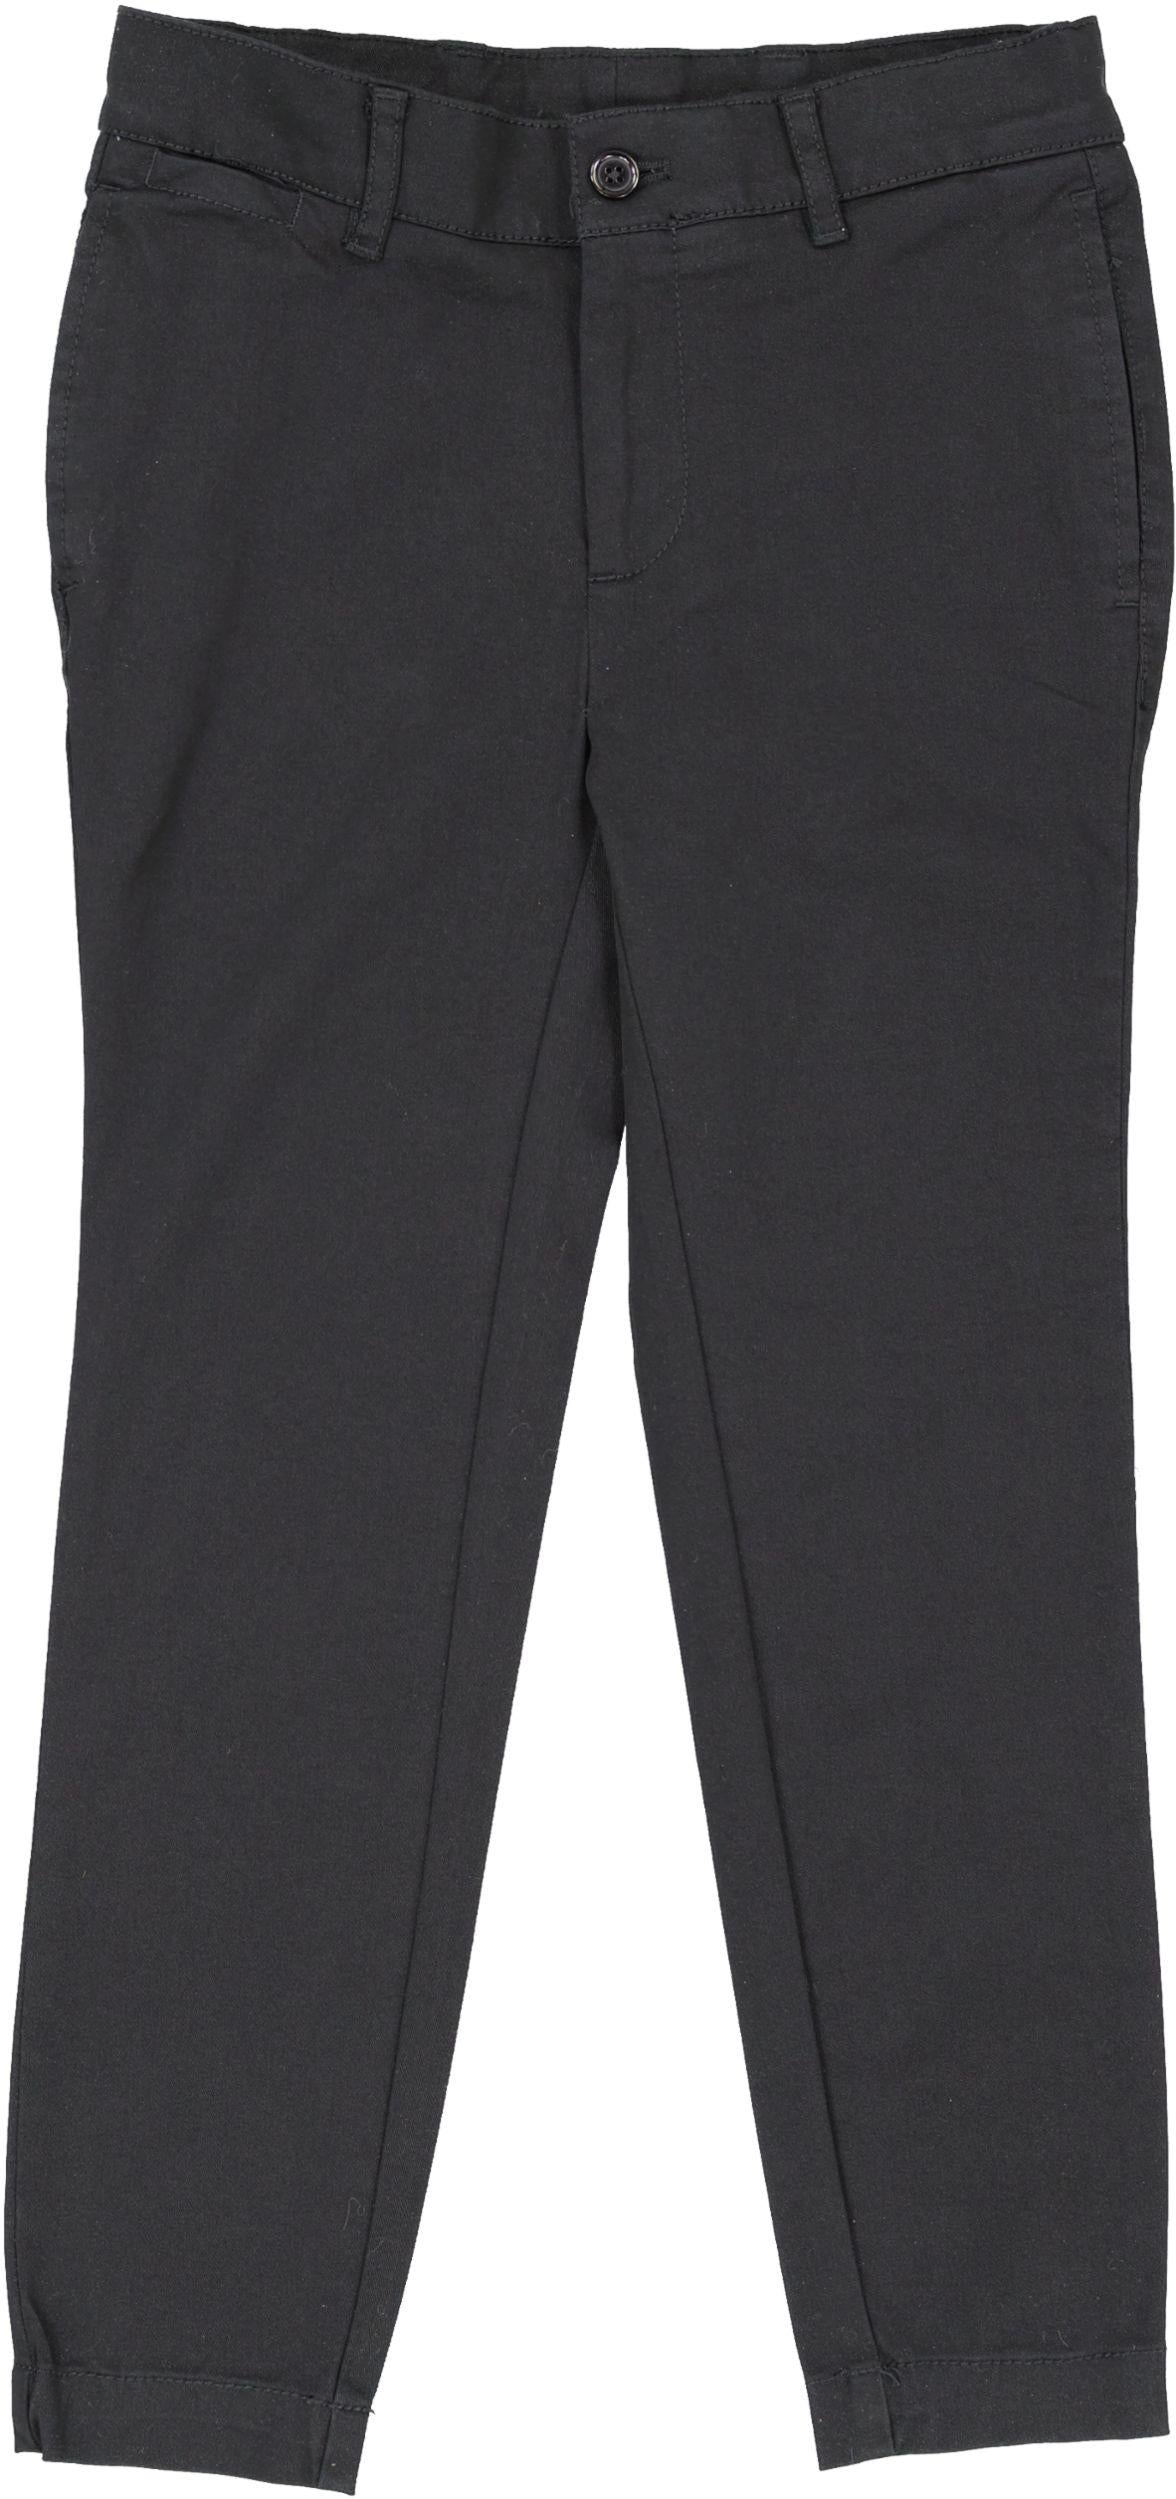 Men Male Young Boys Casual Cargo Streetwear Urban Jogger Pants Techwear  Black | eBay